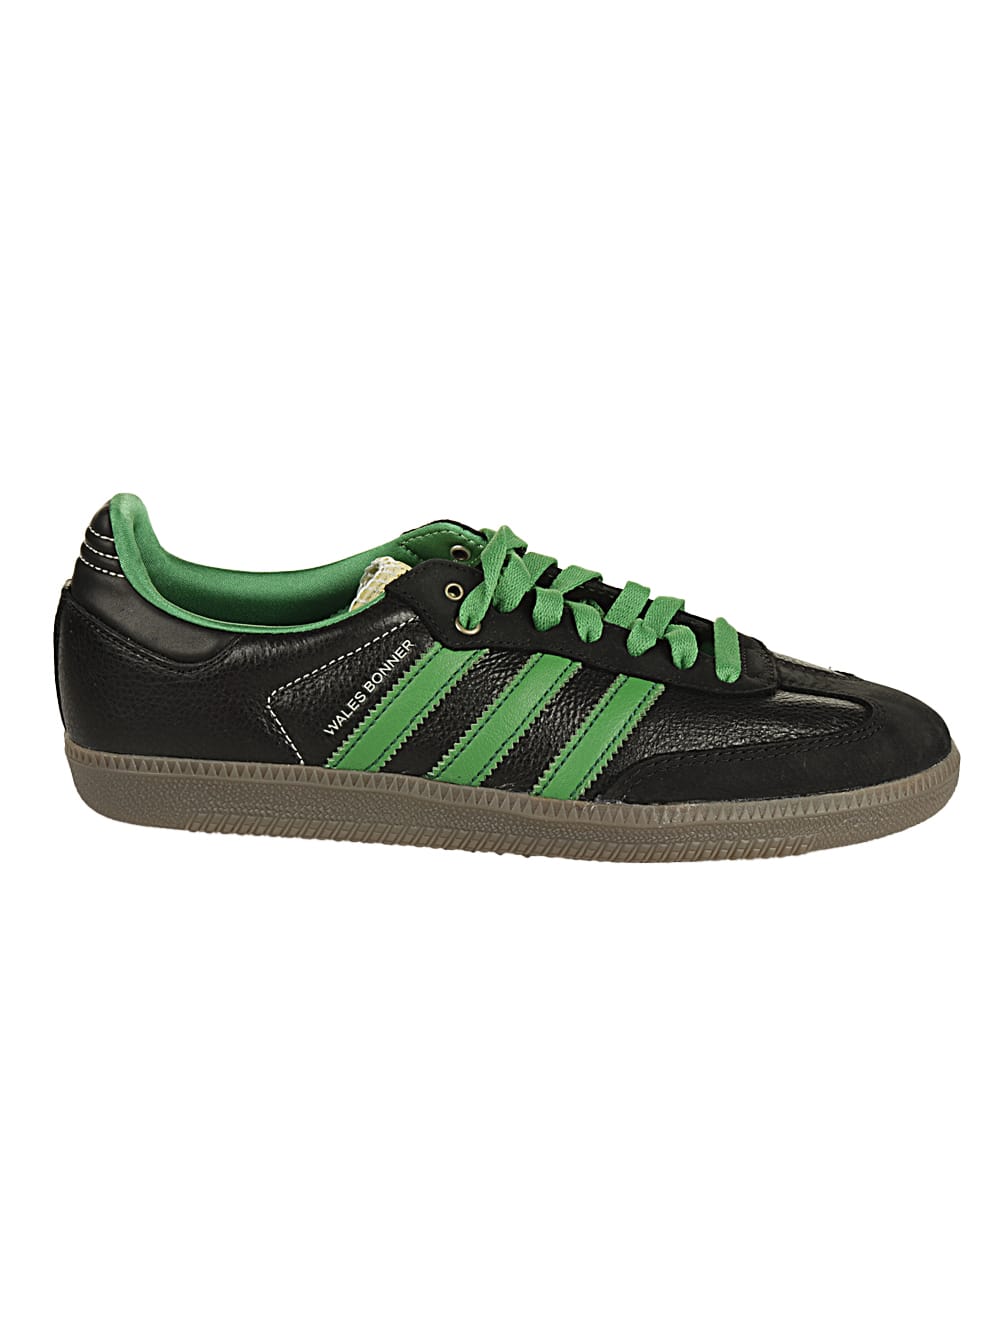 Adidas Originals By Wales Bonner Wales Bonner Samba In Blk/wht/green